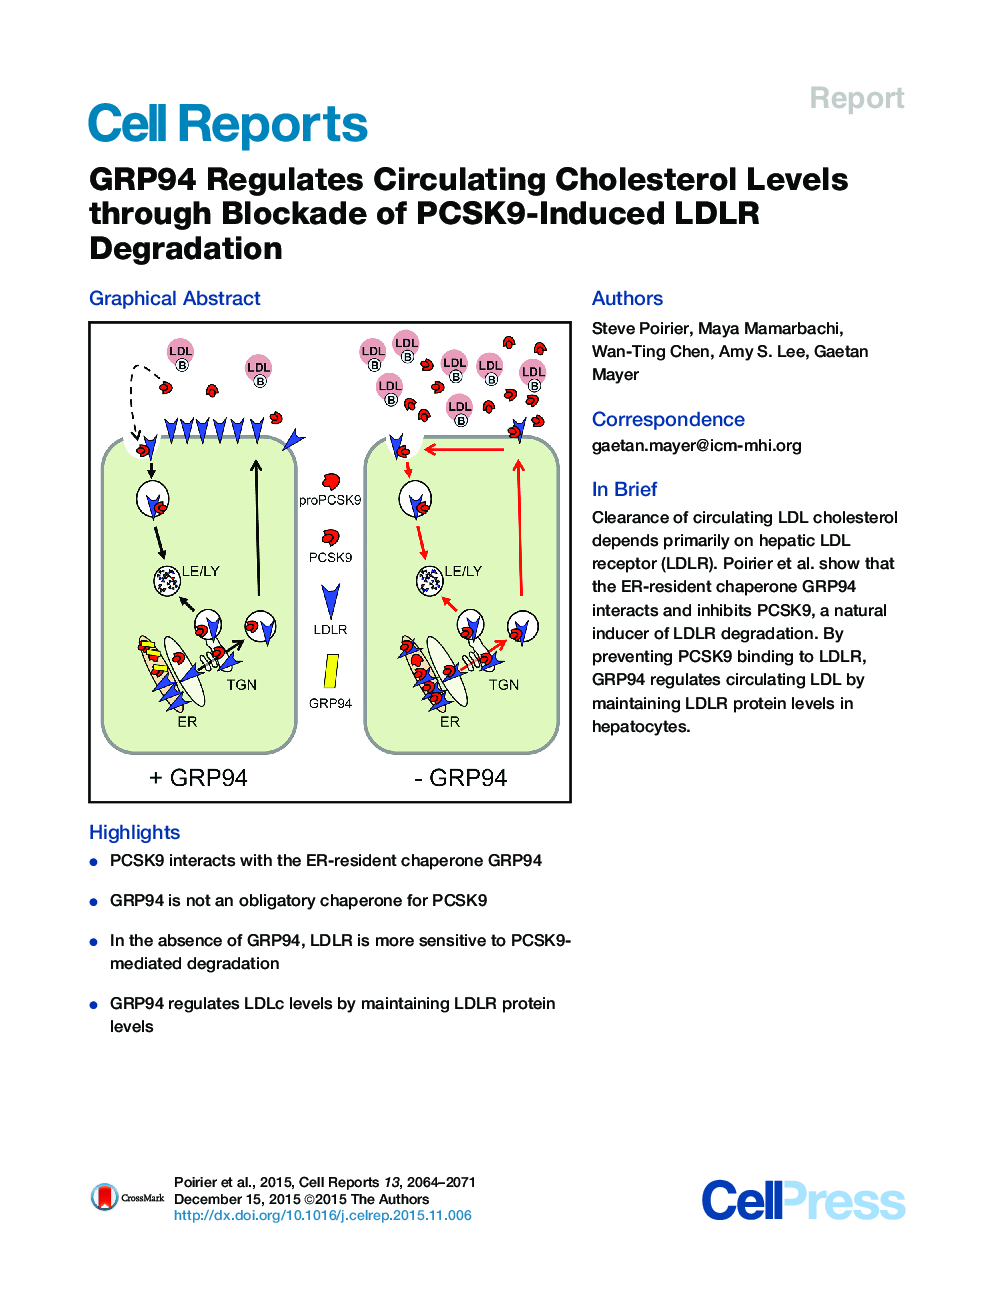 GRP94 Regulates Circulating Cholesterol Levels through Blockade of PCSK9-Induced LDLR Degradation 